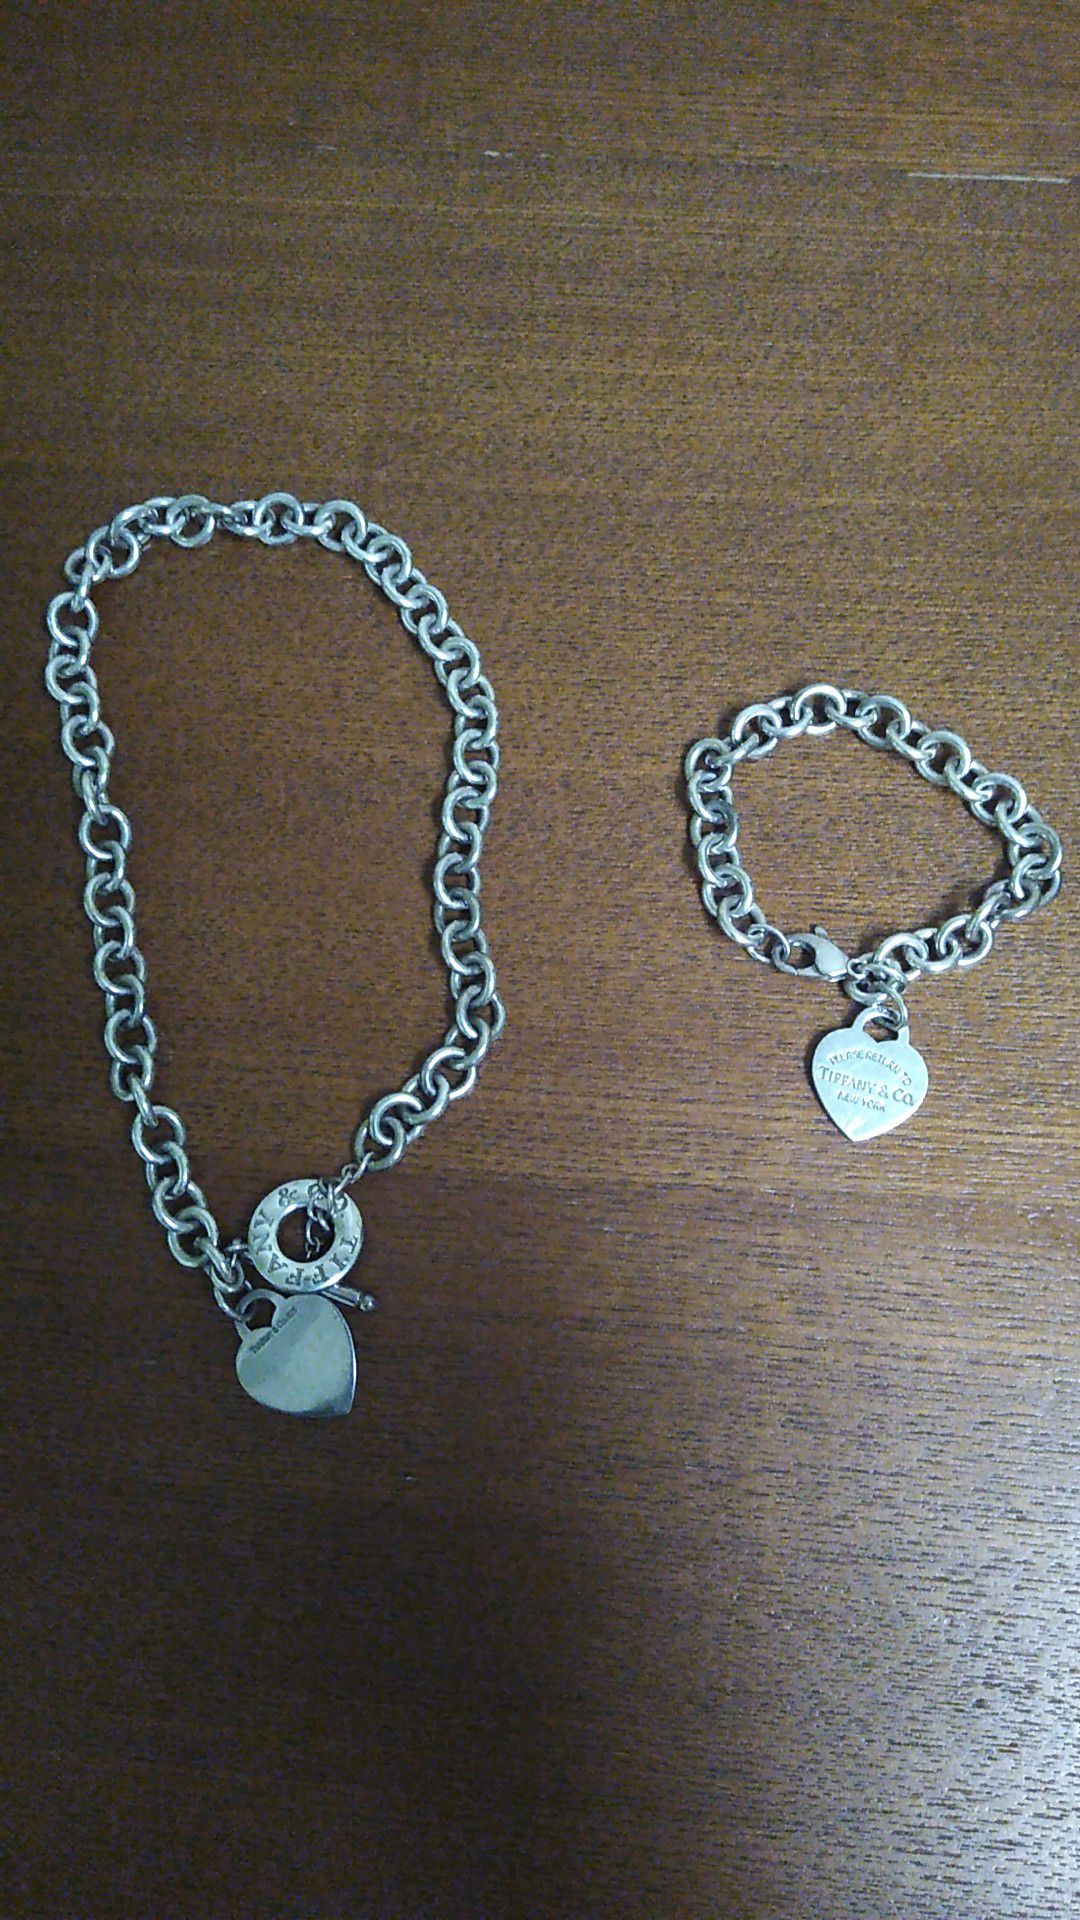 100% Genuine Tiffany necklace and bracelet